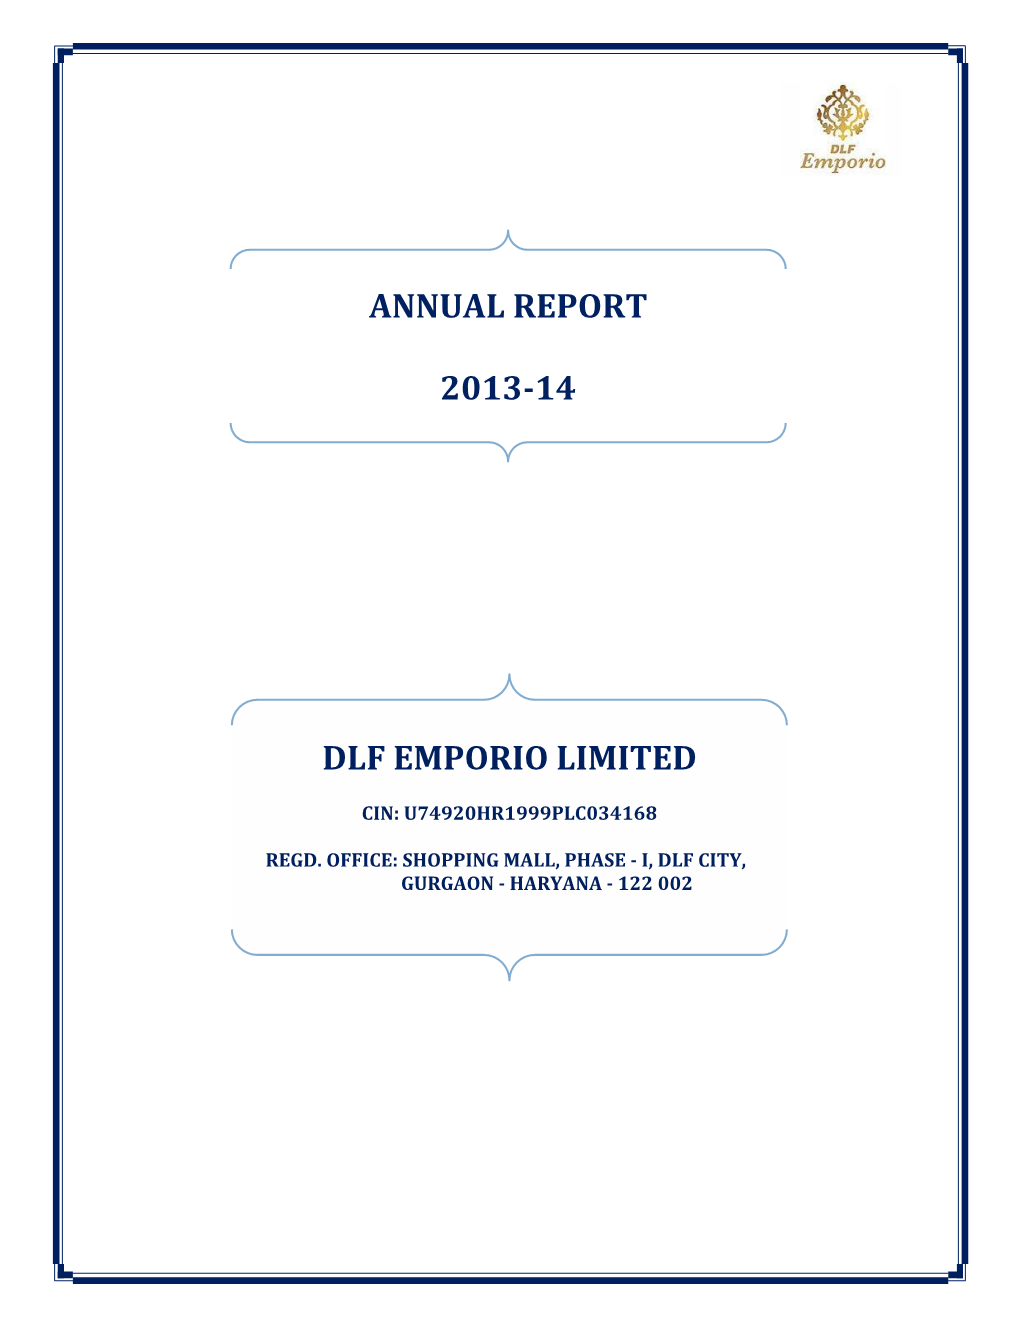 Annual Report 2013-14 Dlf Emporio Limited